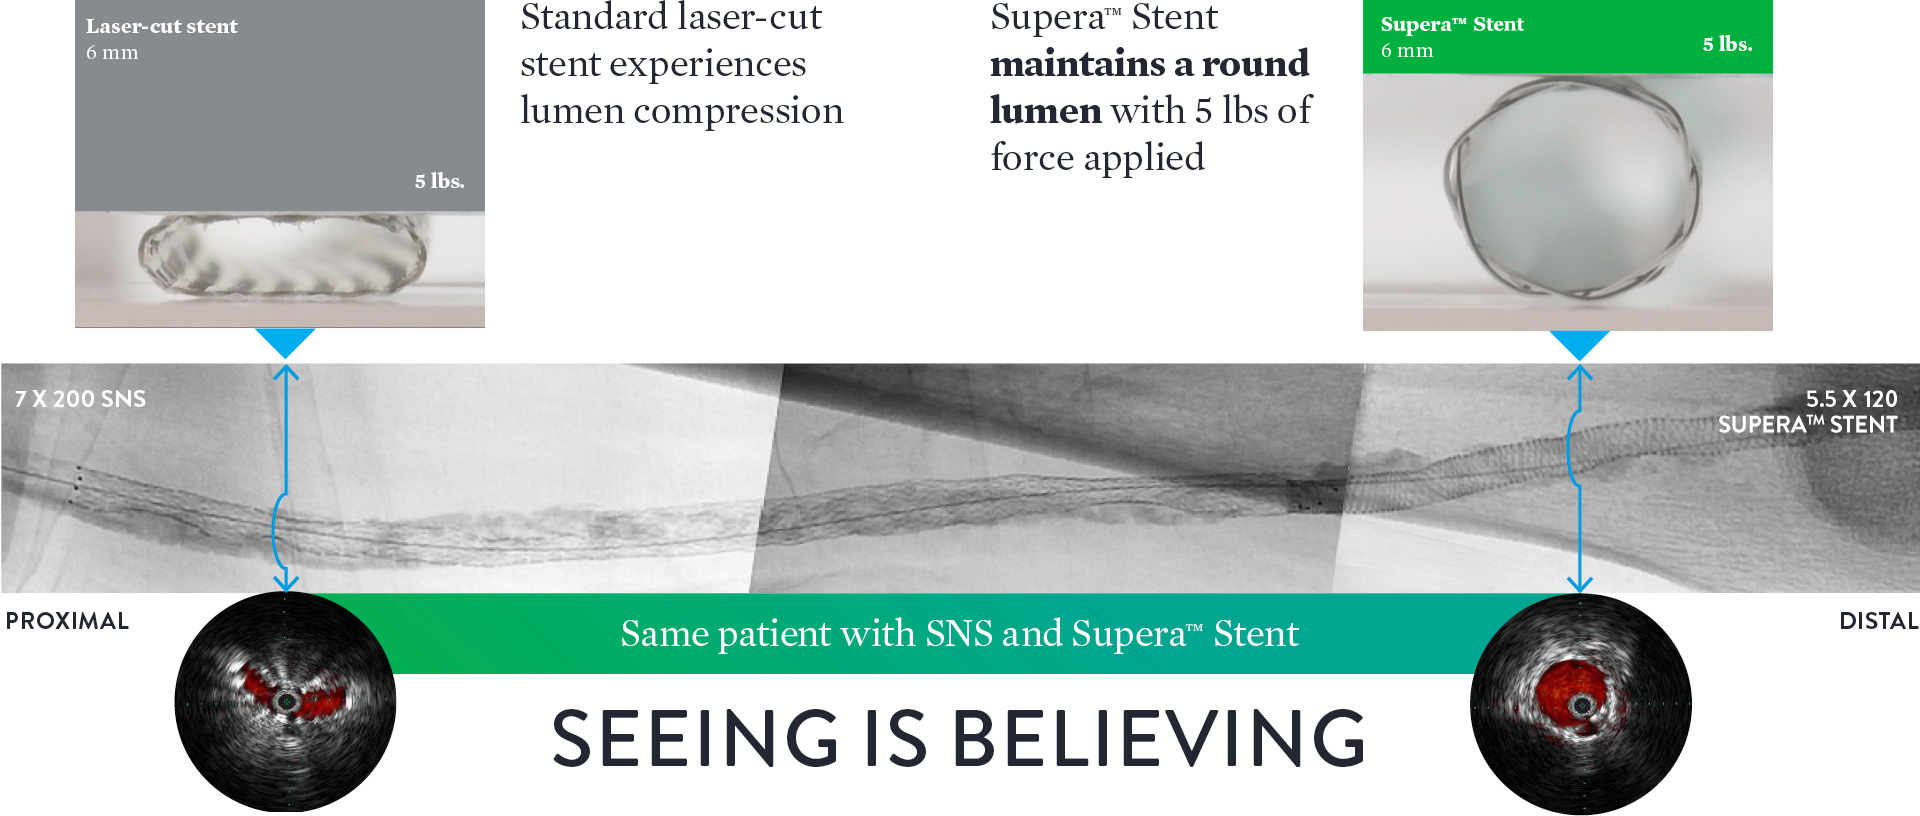   Laser-cut stent vs. Supera stent